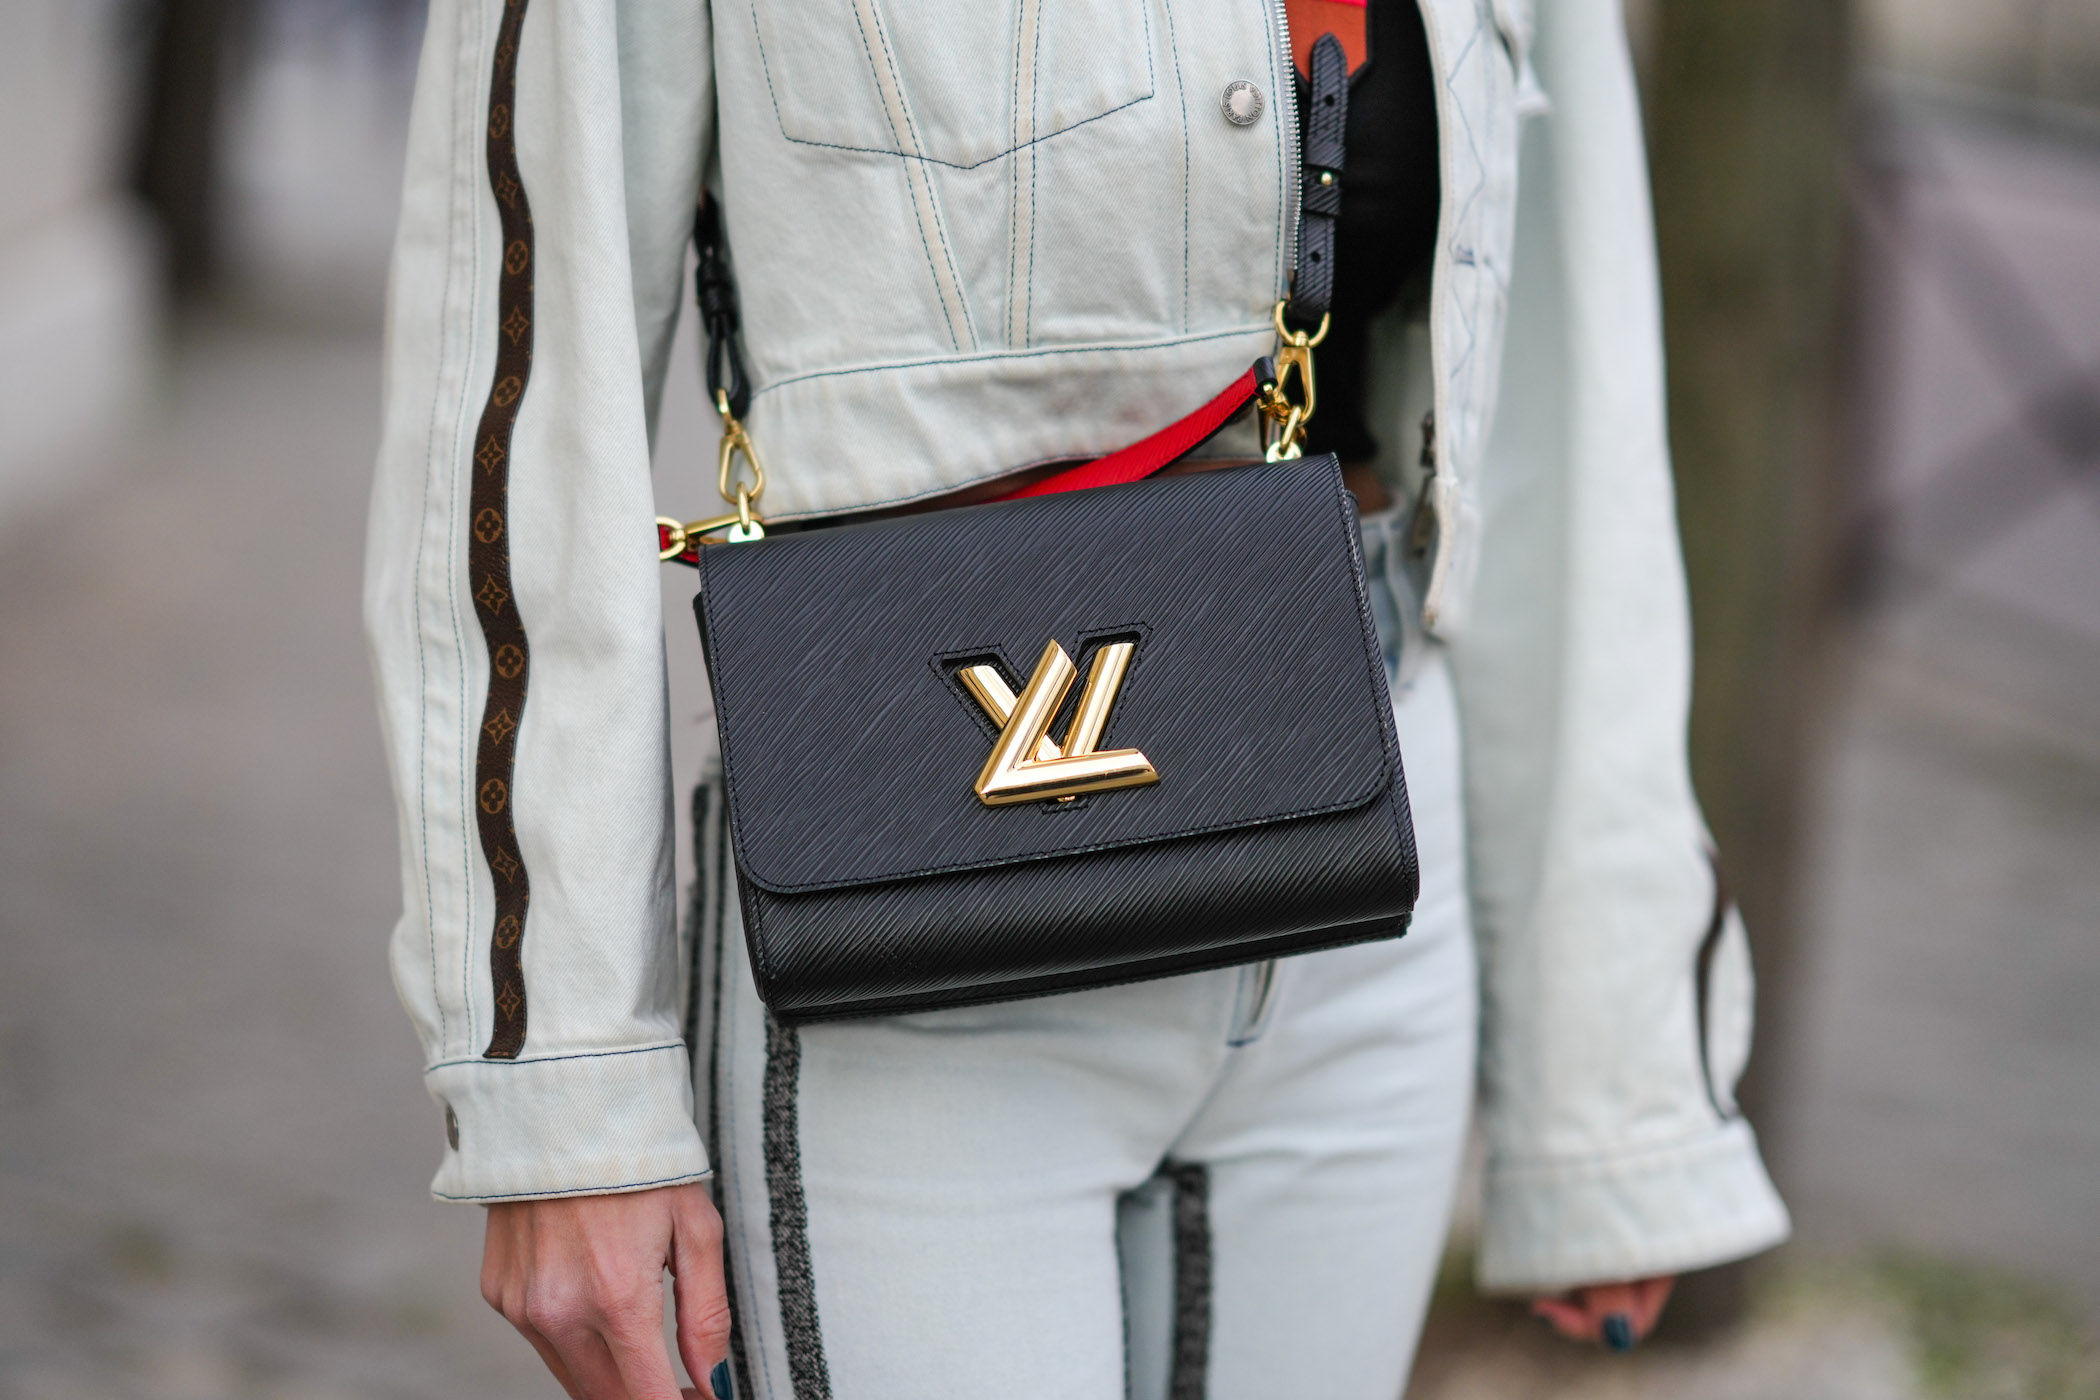 Fake vs Real  Louis Vuitton Monogram Speedy 25  Handbag Comparison and  Authentication  YouTube